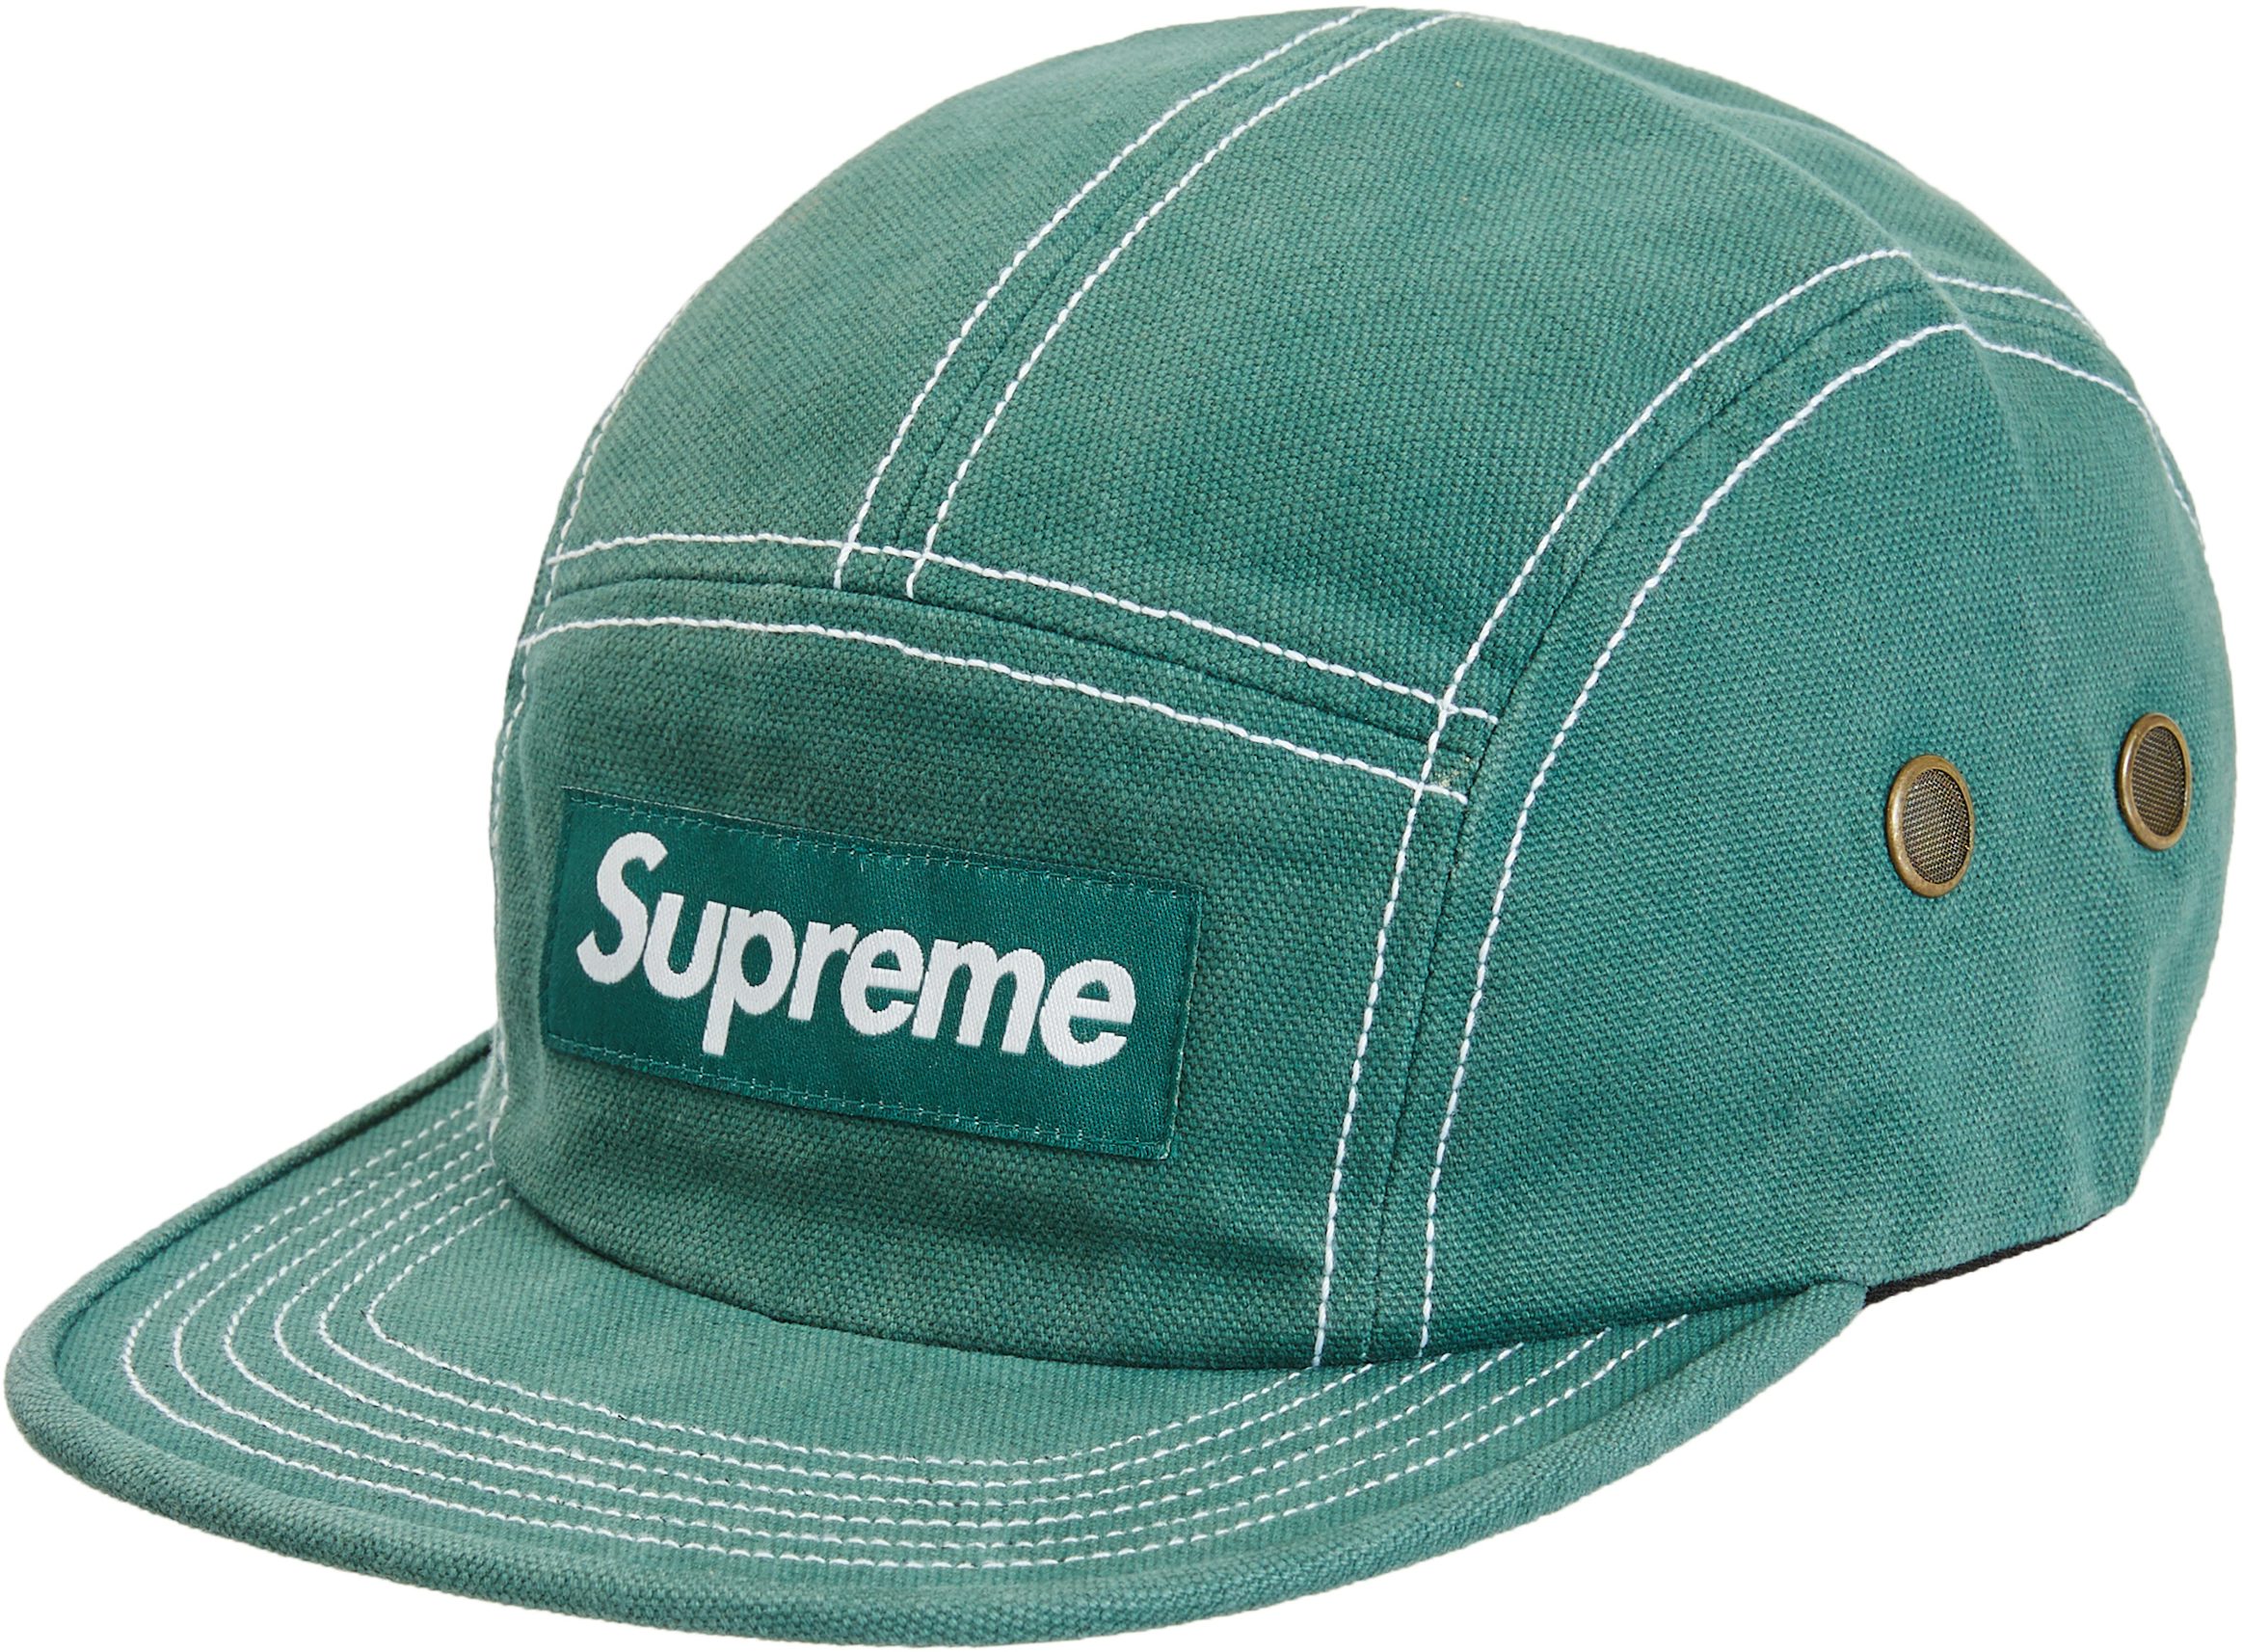 Supreme cap green - Gem